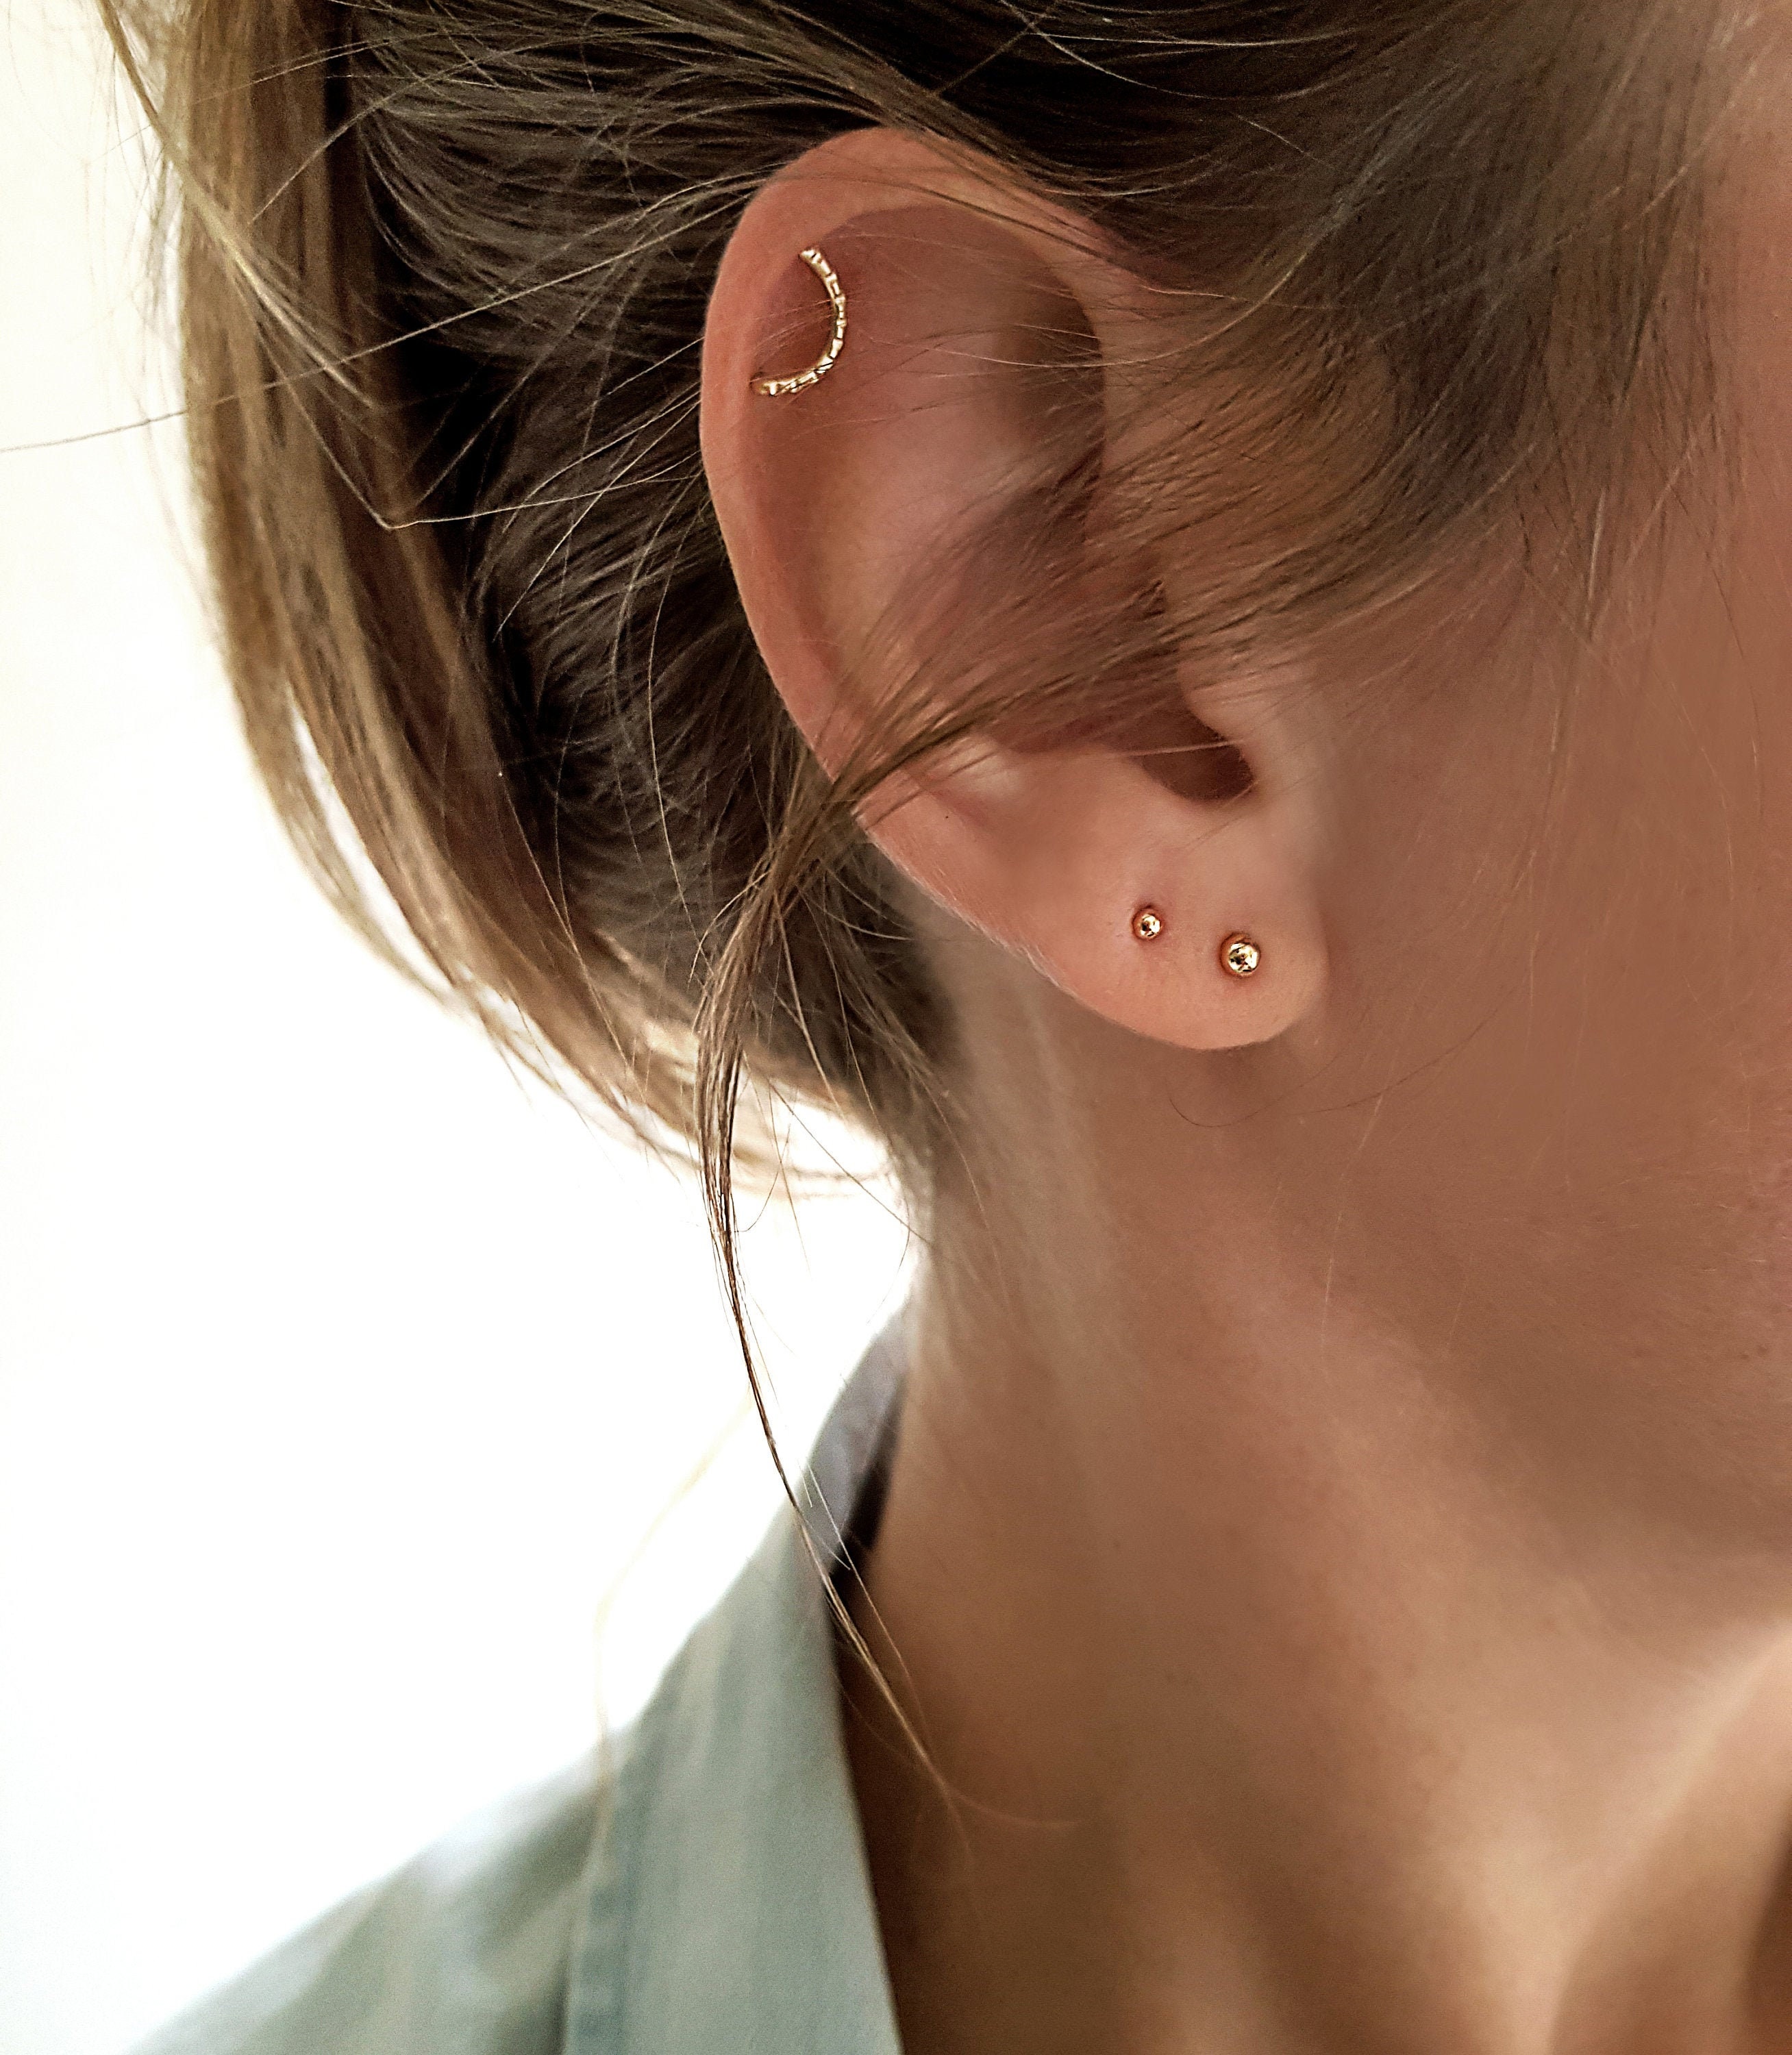 Aggregate more than 84 single earrings for cartilage best  3tdesigneduvn